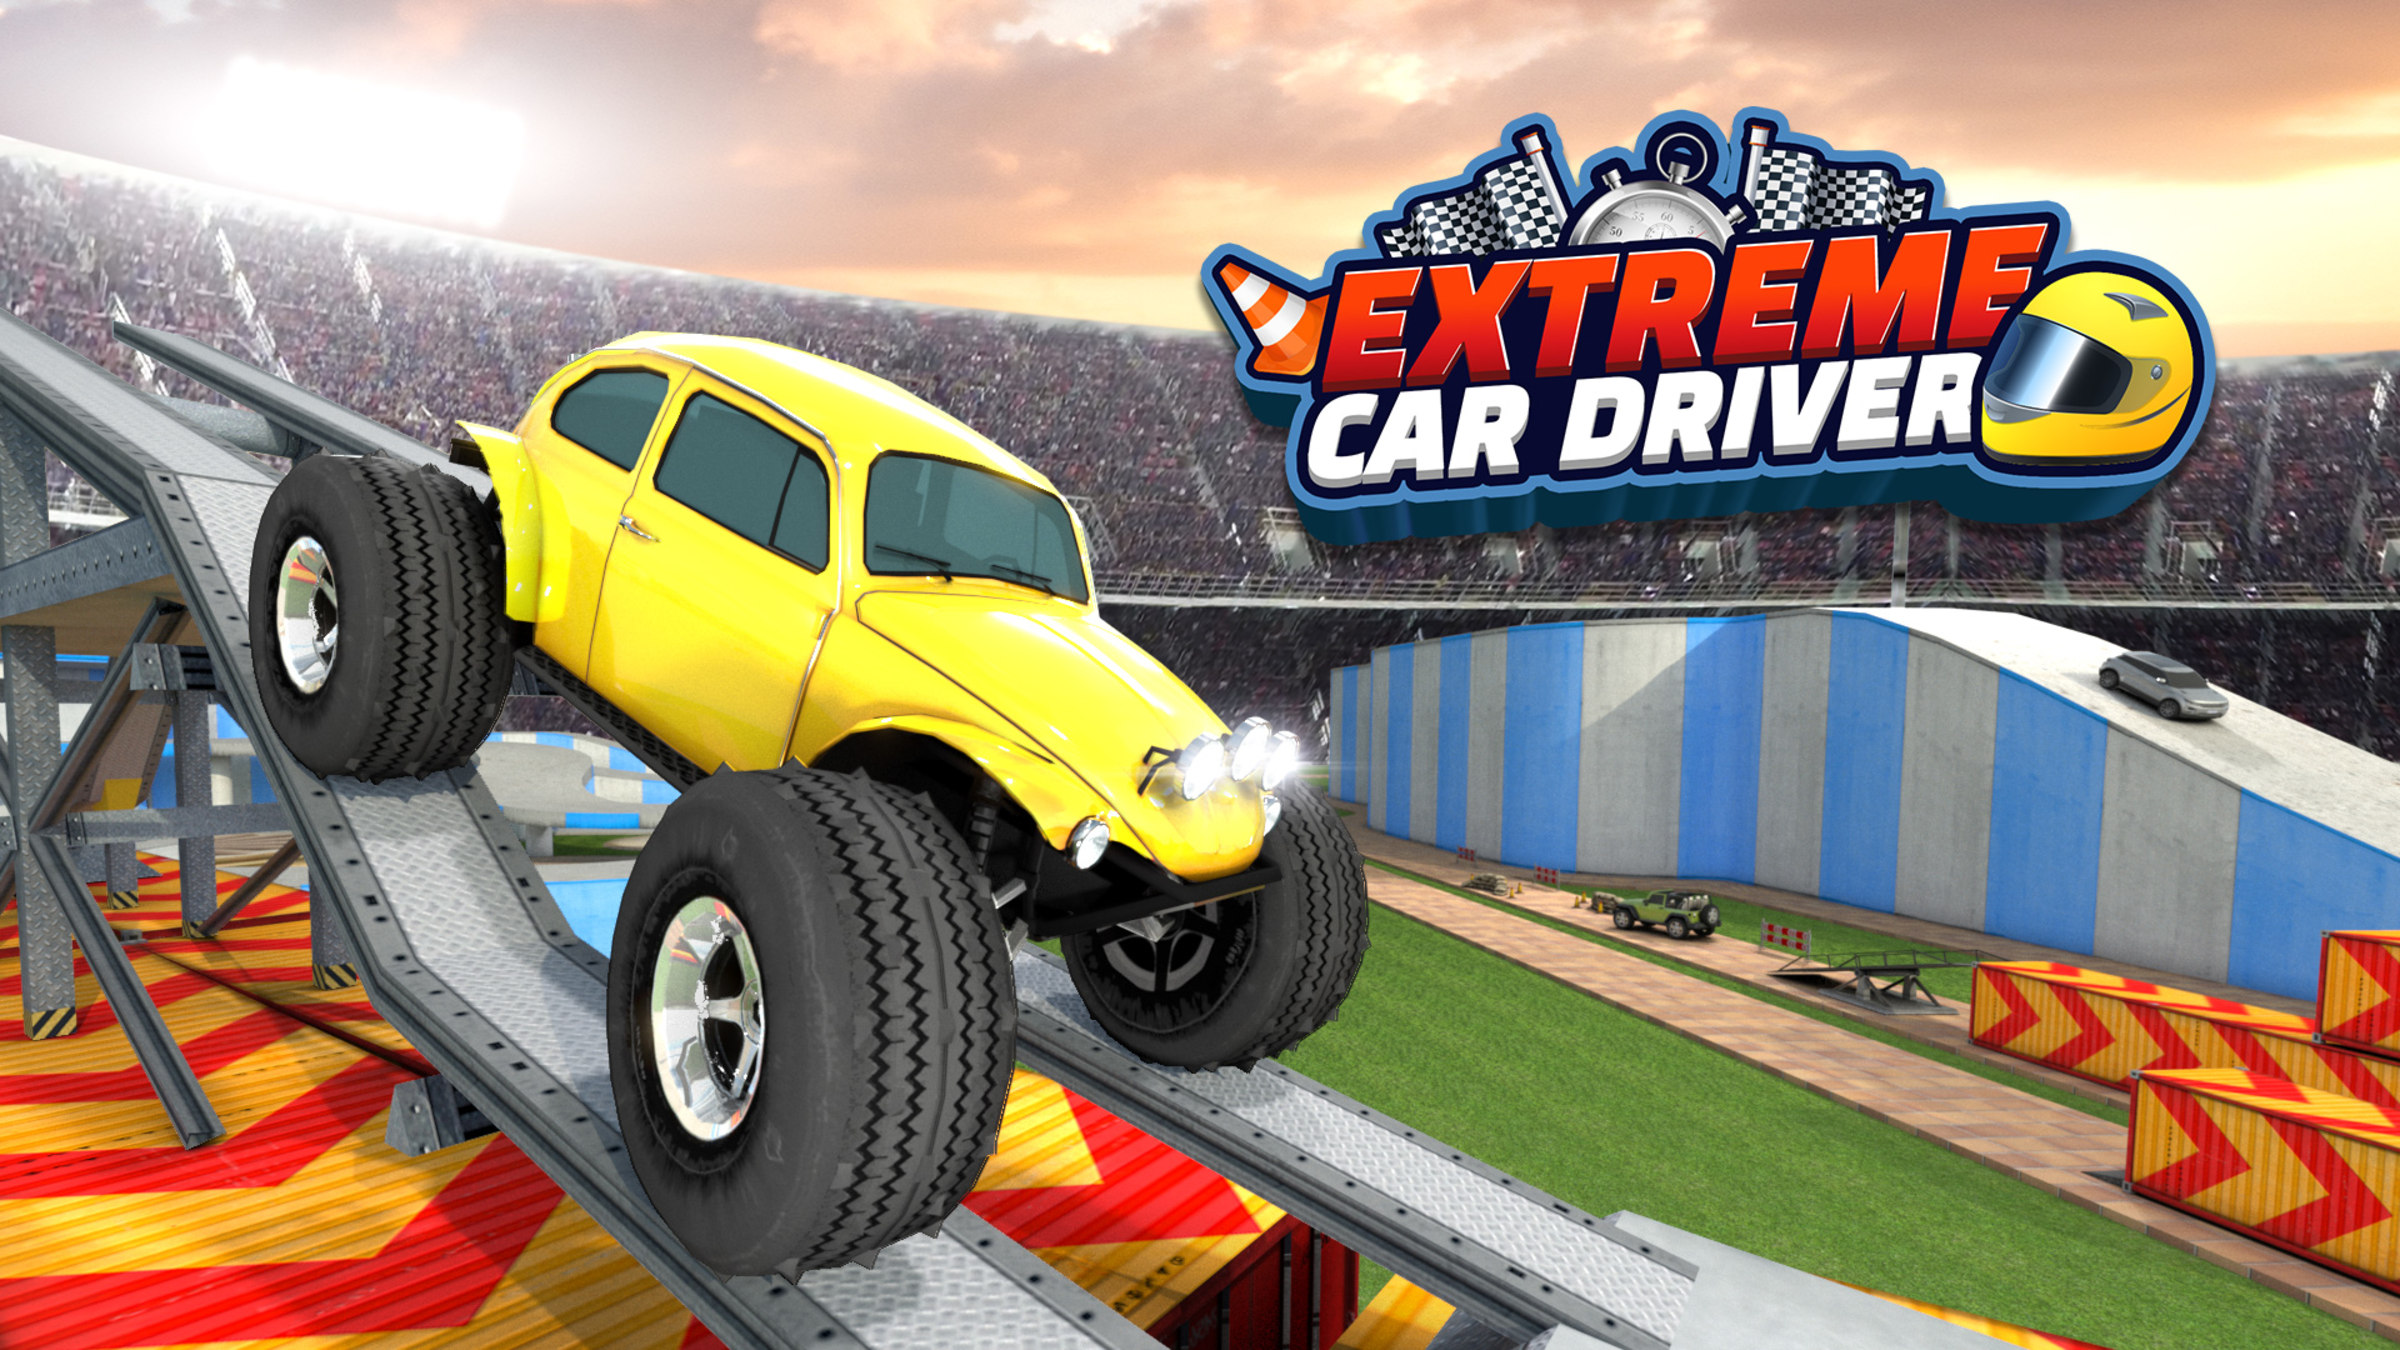 🎮 Driving Games: Free Online Car, Truck & Simulator Games